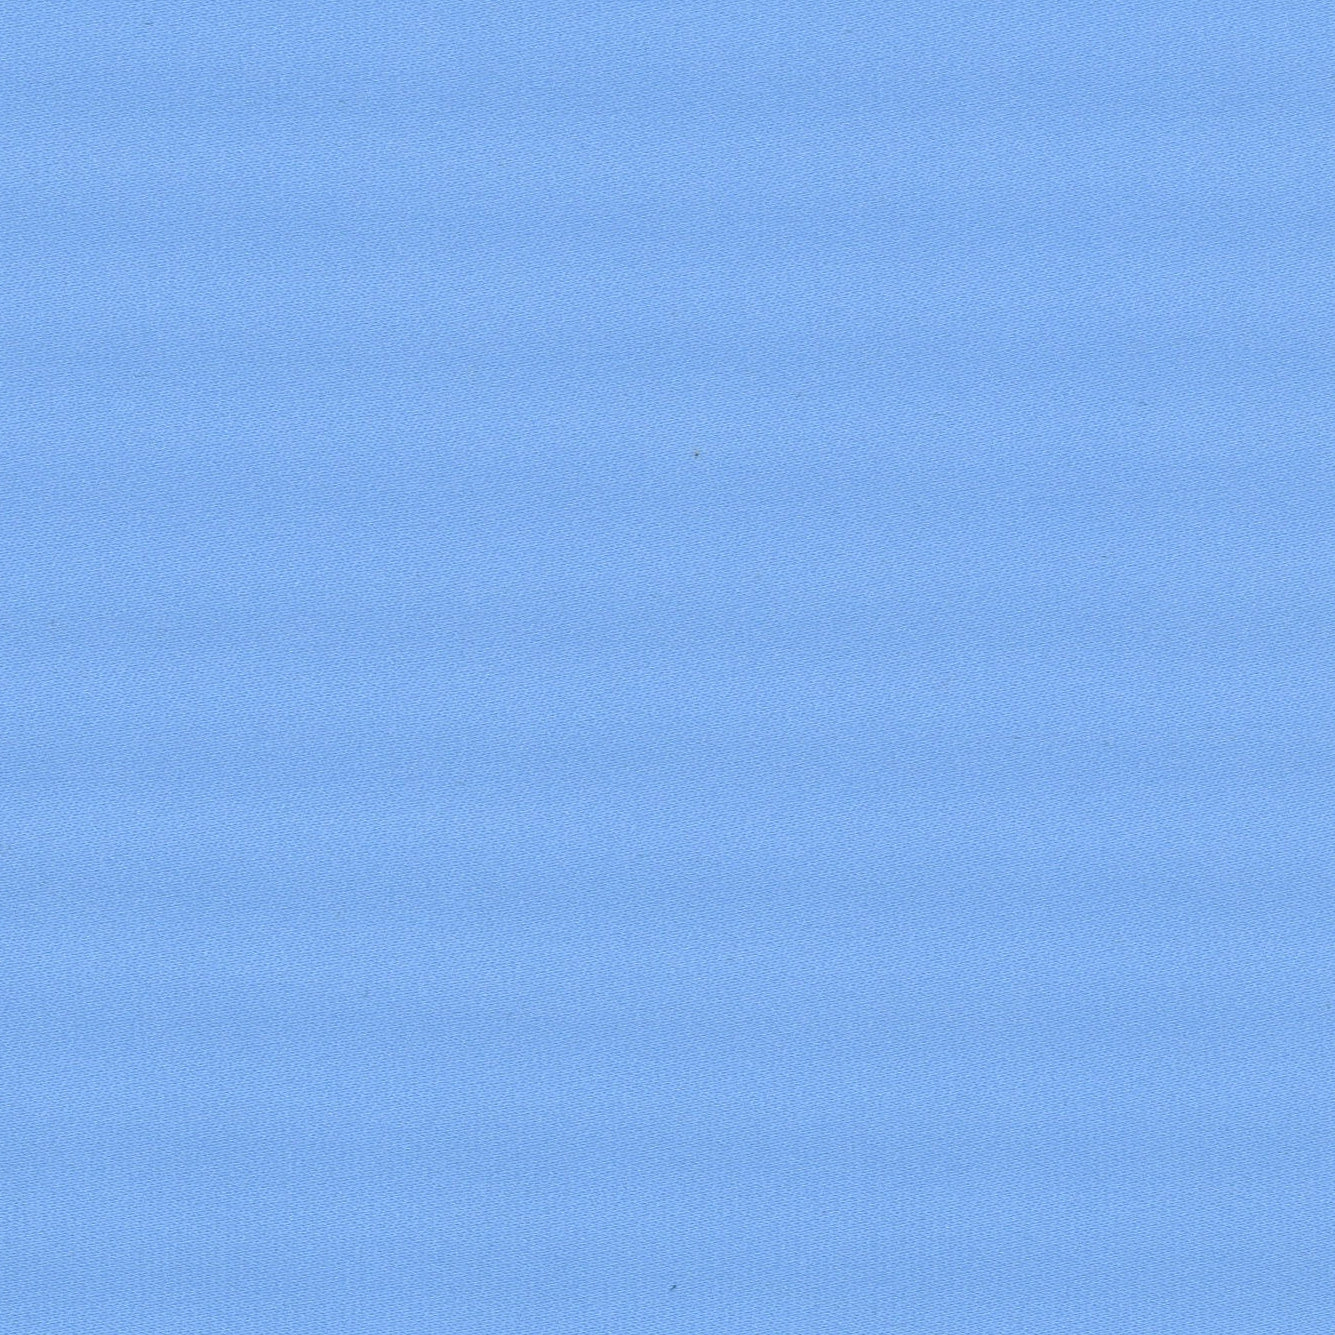 36033-10 Light Blue Polyester Plain Dyed 233g/yd 56" blue plain dyed polyester woven Solid Color - knit fabric - woven fabric - fabric company - fabric wholesale - fabric b2b - fabric factory - high quality fabric - hong kong fabric - fabric hk - acetate fabric - cotton fabric - linen fabric - metallic fabric - nylon fabric - polyester fabric - spandex fabric - chun wing hing - cwh hk - fabric worldwide ship - 針織布 - 梳織布 - 布料公司- 布料批發 - 香港布料 - 秦榮興